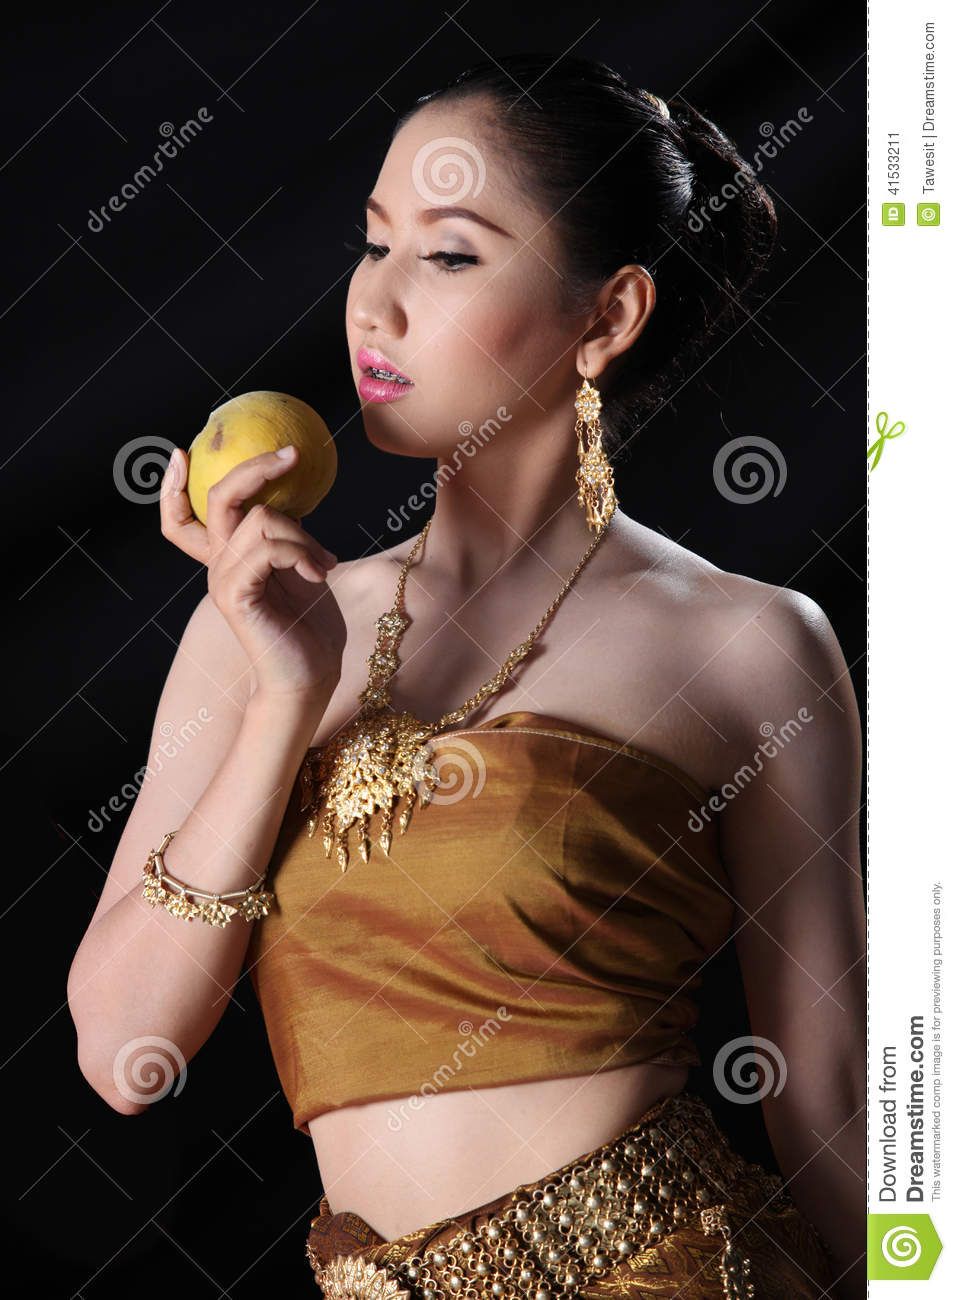 https://www.aldiario.com/wp-content/uploads/2022/09/thai-model-peach-traditional-dress-41533211.jpg